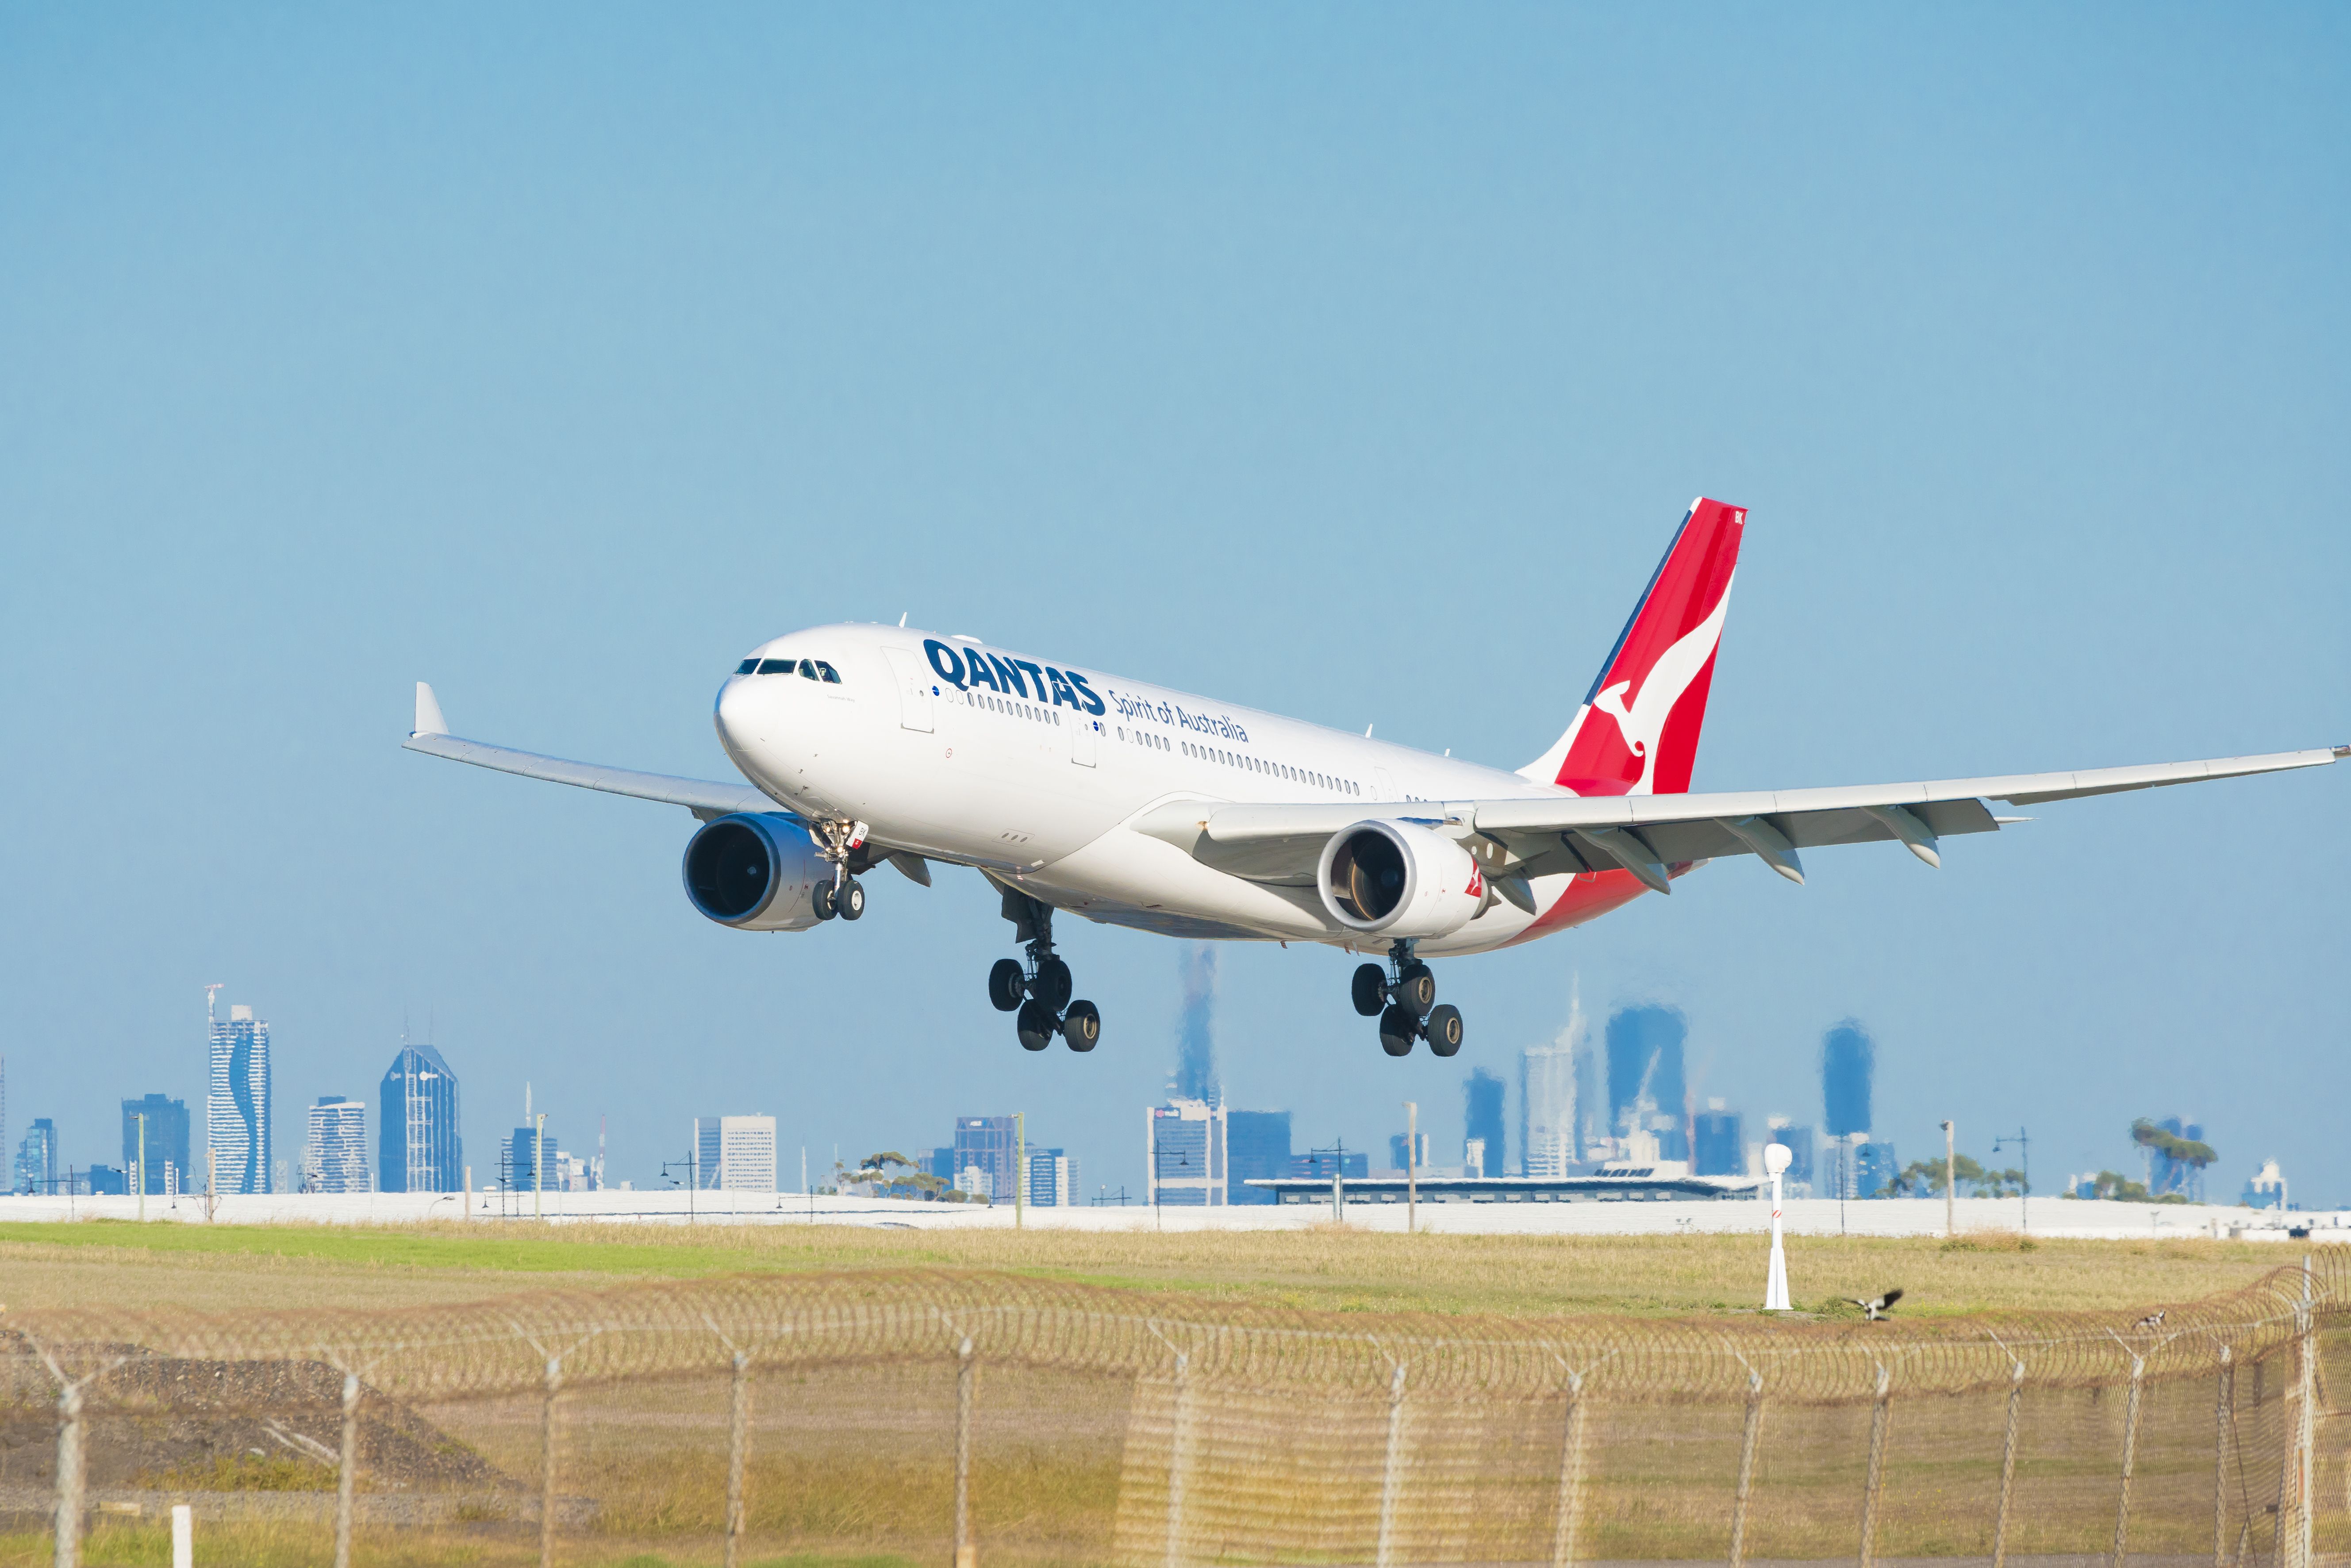 Qantas A330 landing at Melbourne Airport.